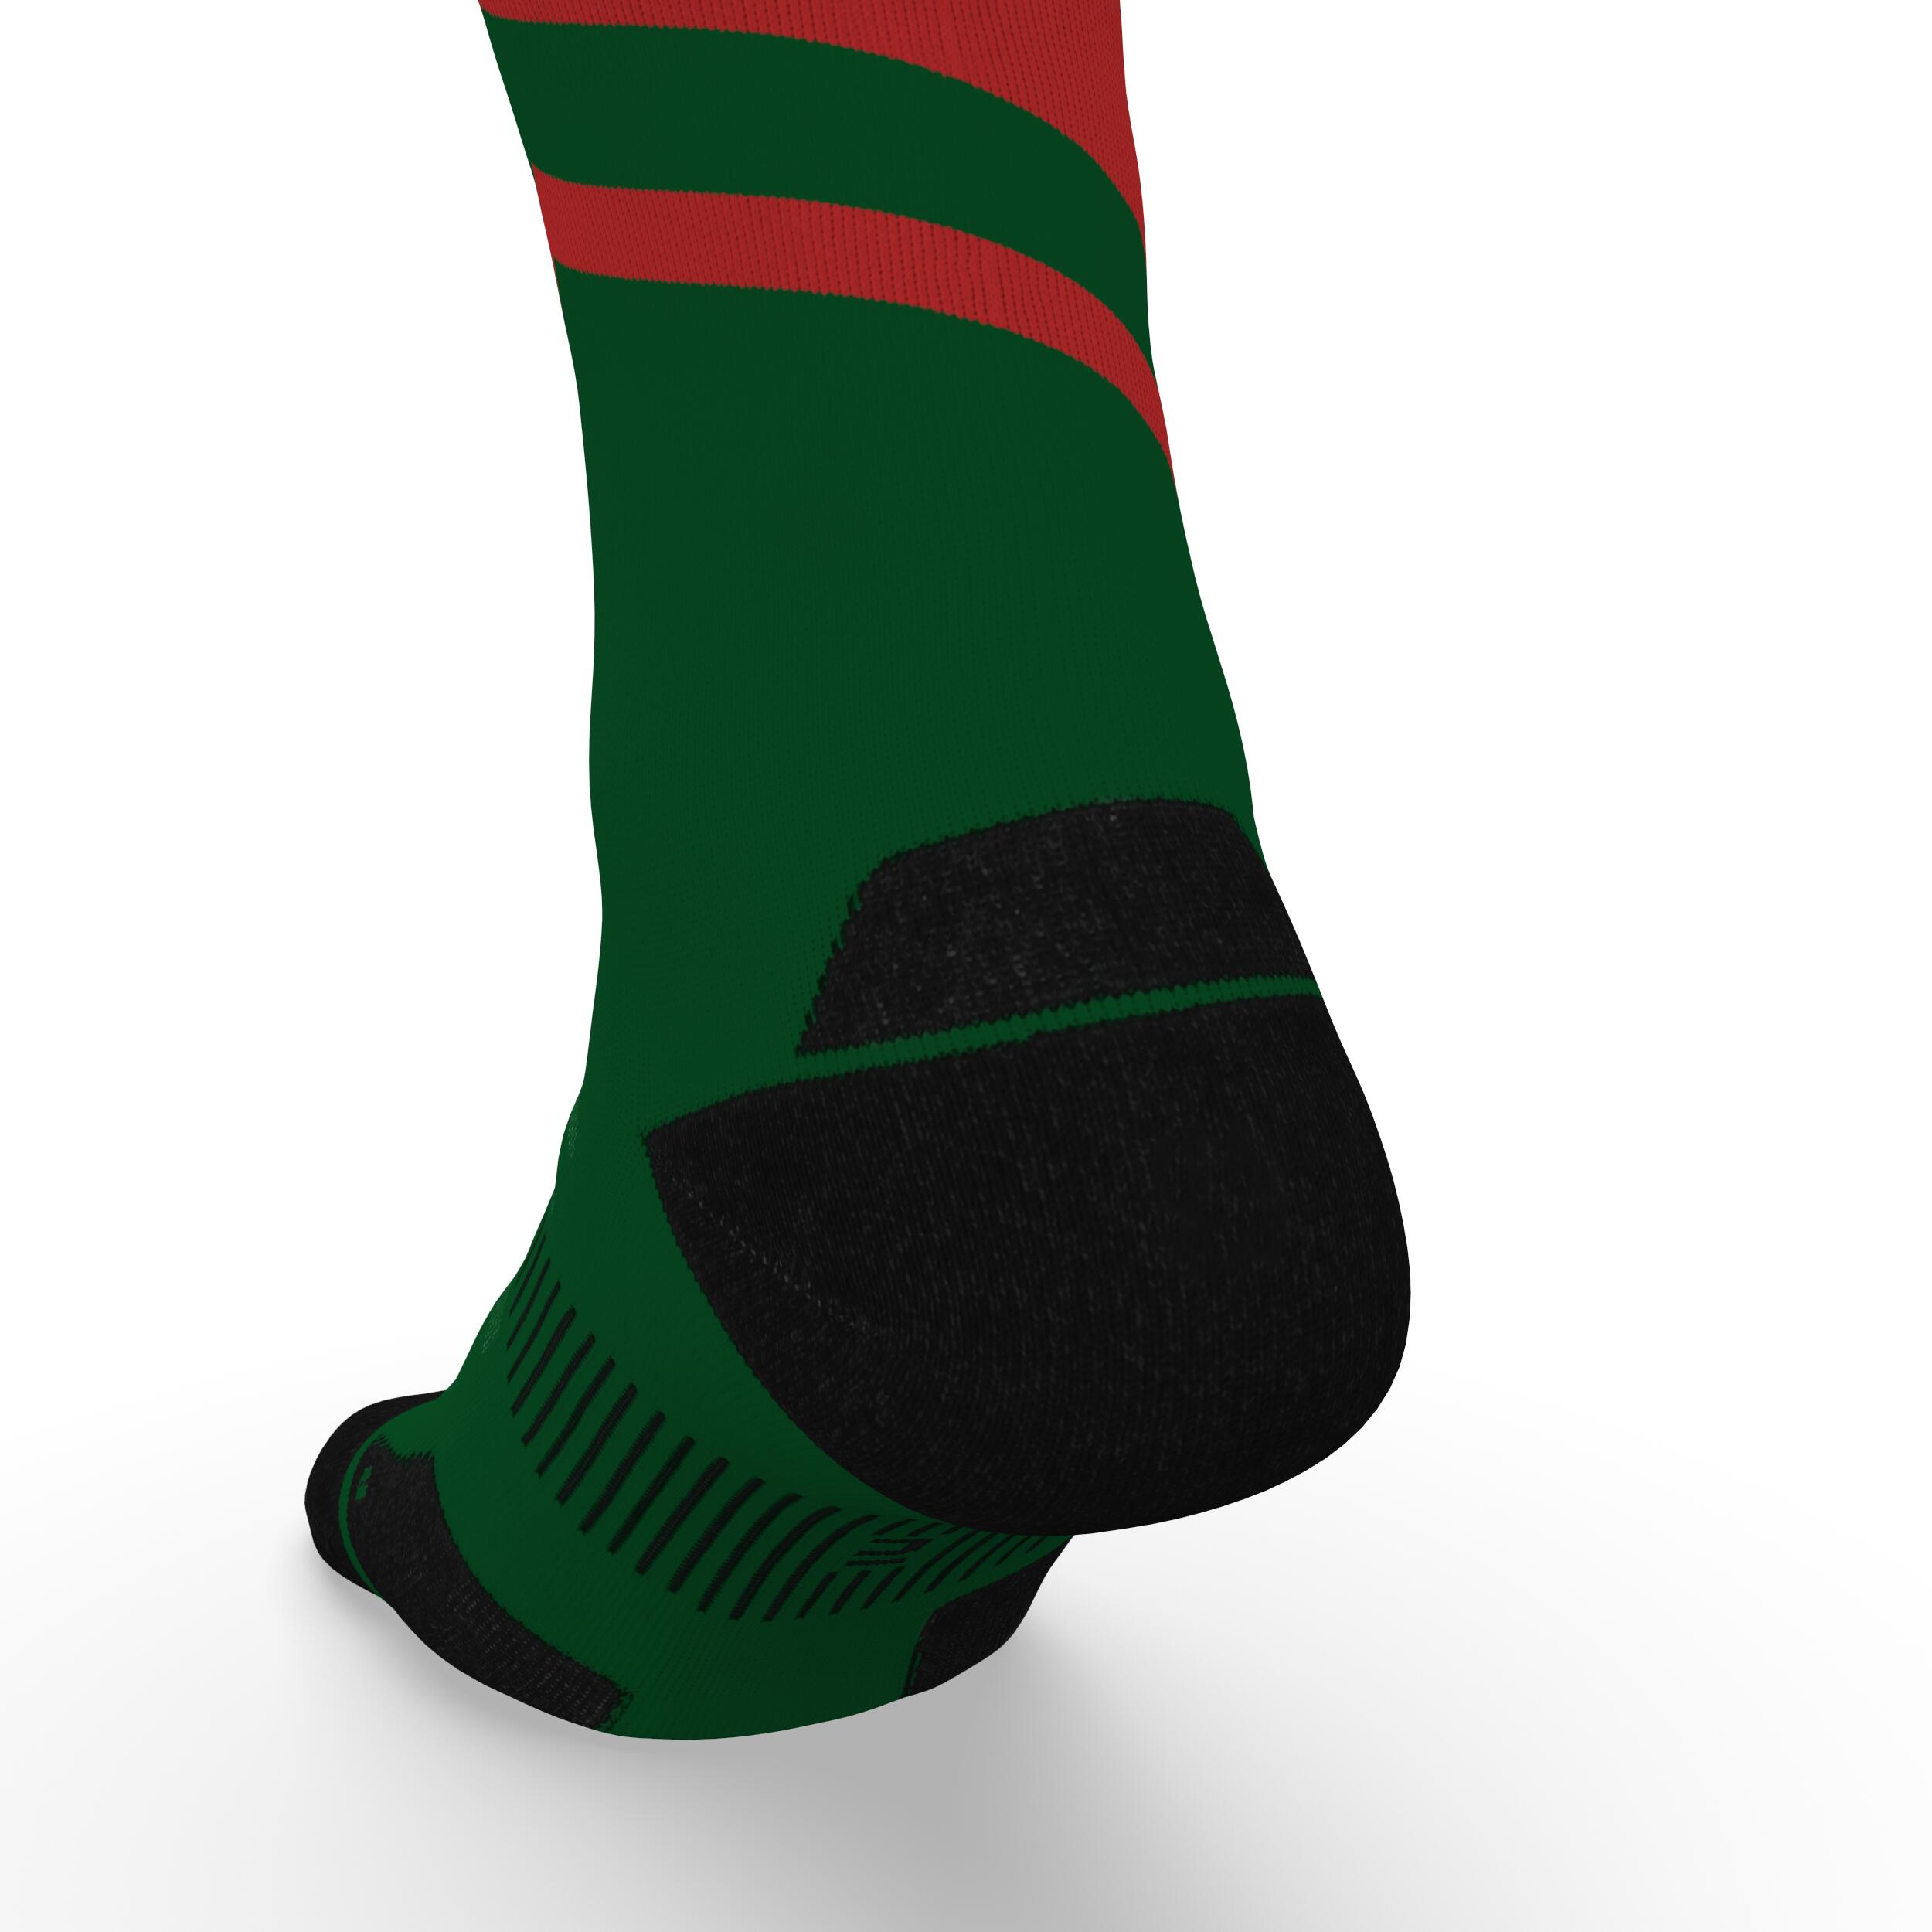 Run900 Mid-Calf Thick Running Socks - Green/Red 7/7